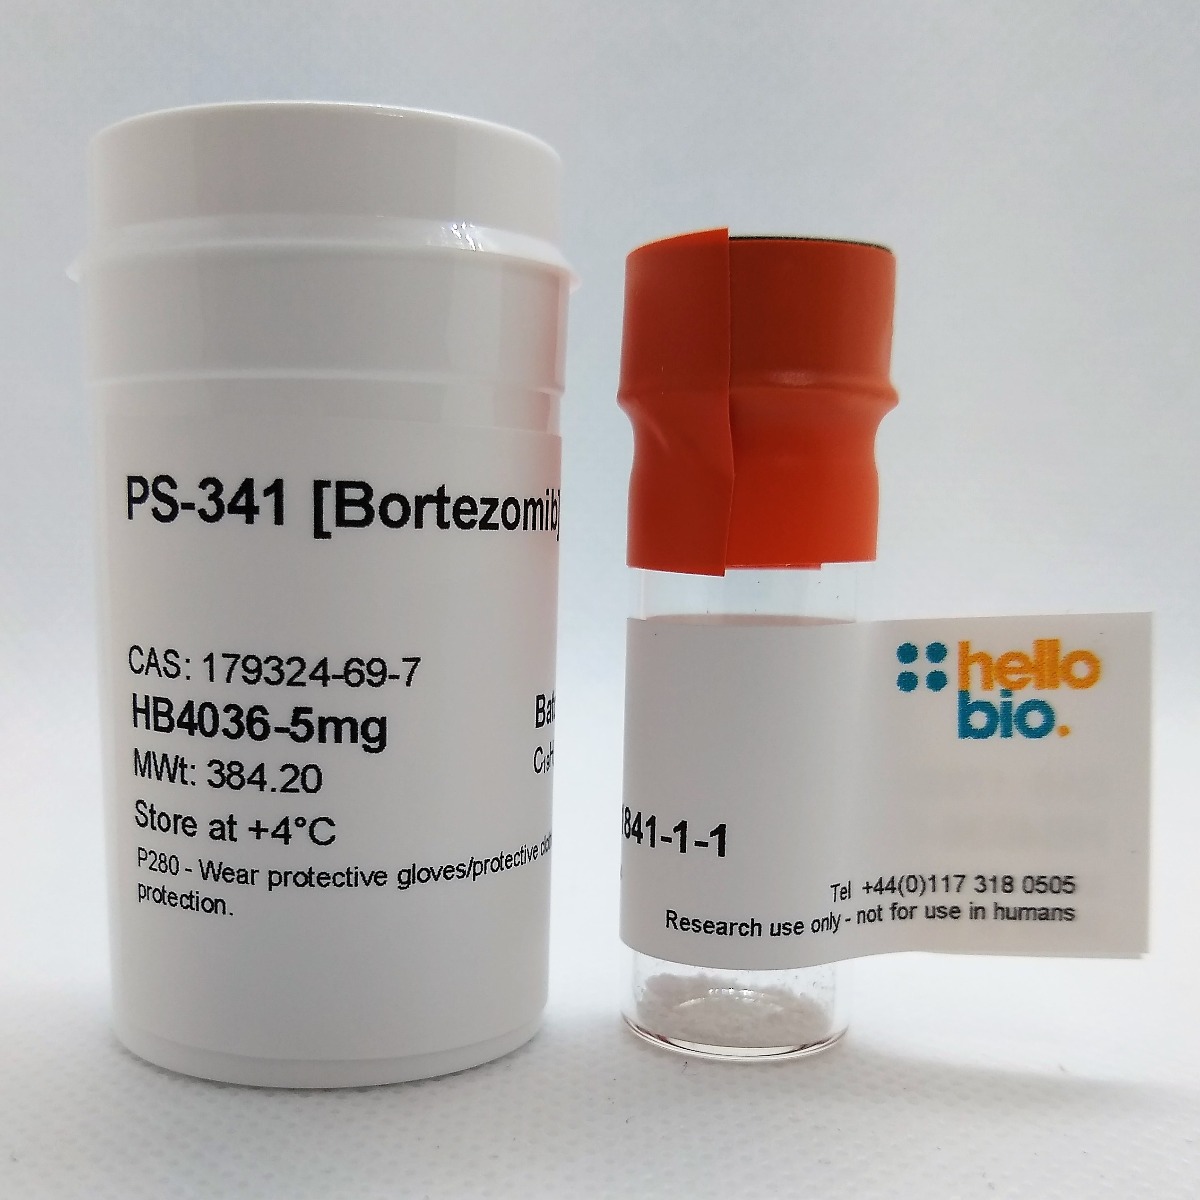 PS-341 [Bortezomib] product vial image | Hello Bio